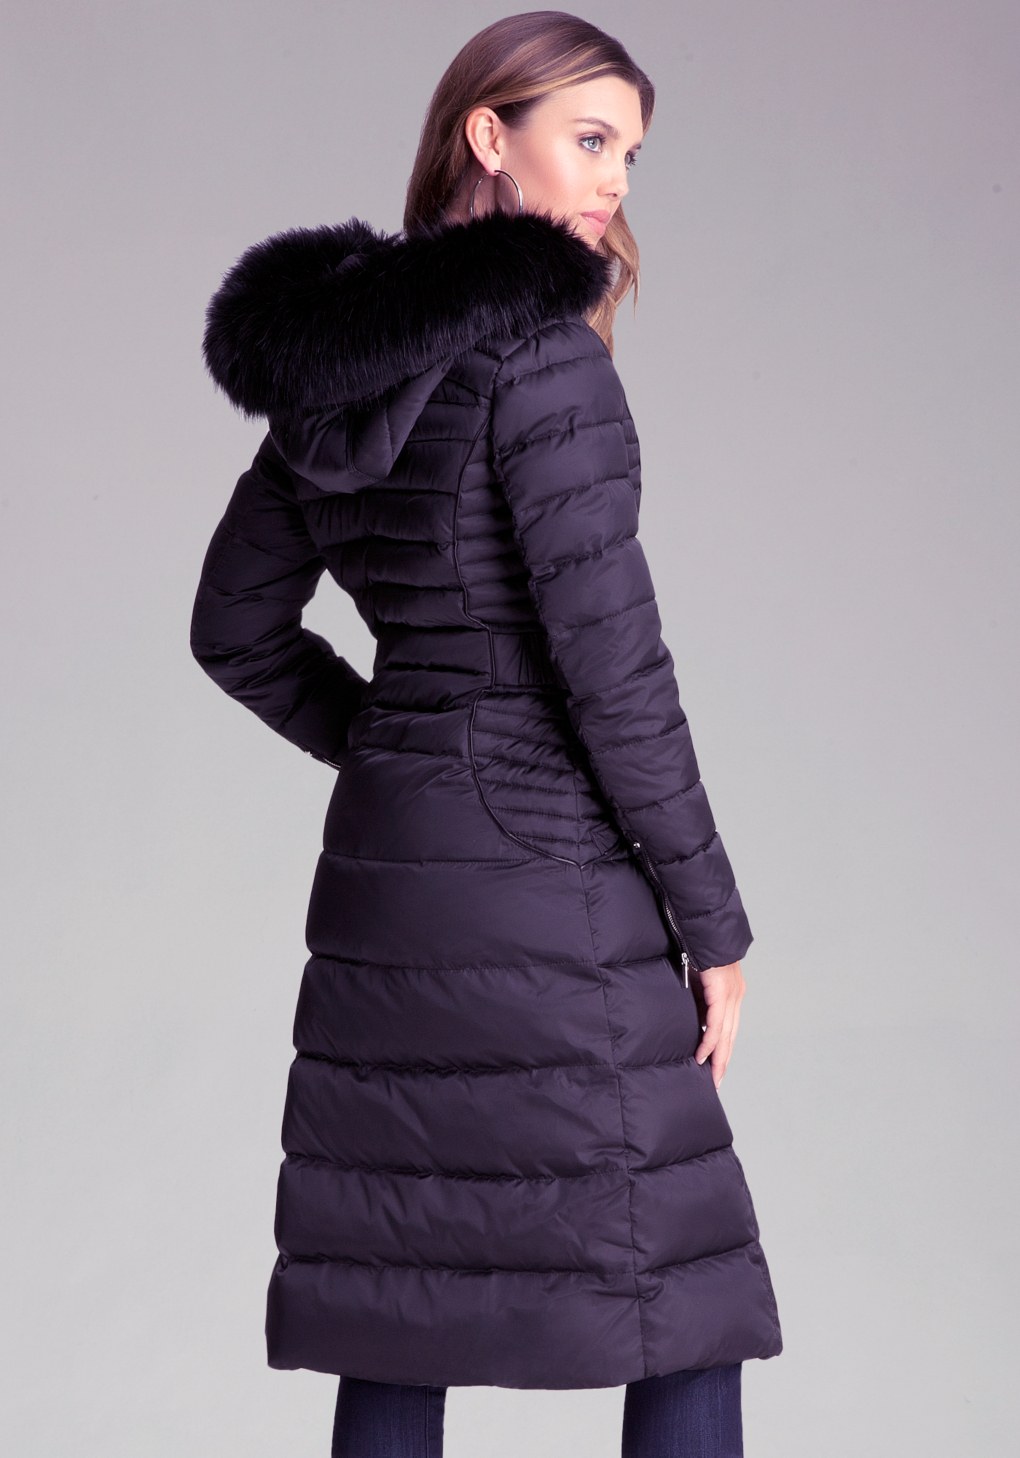 Lyst - Bebe Faux Fur Maxi Puffer Coat in Black